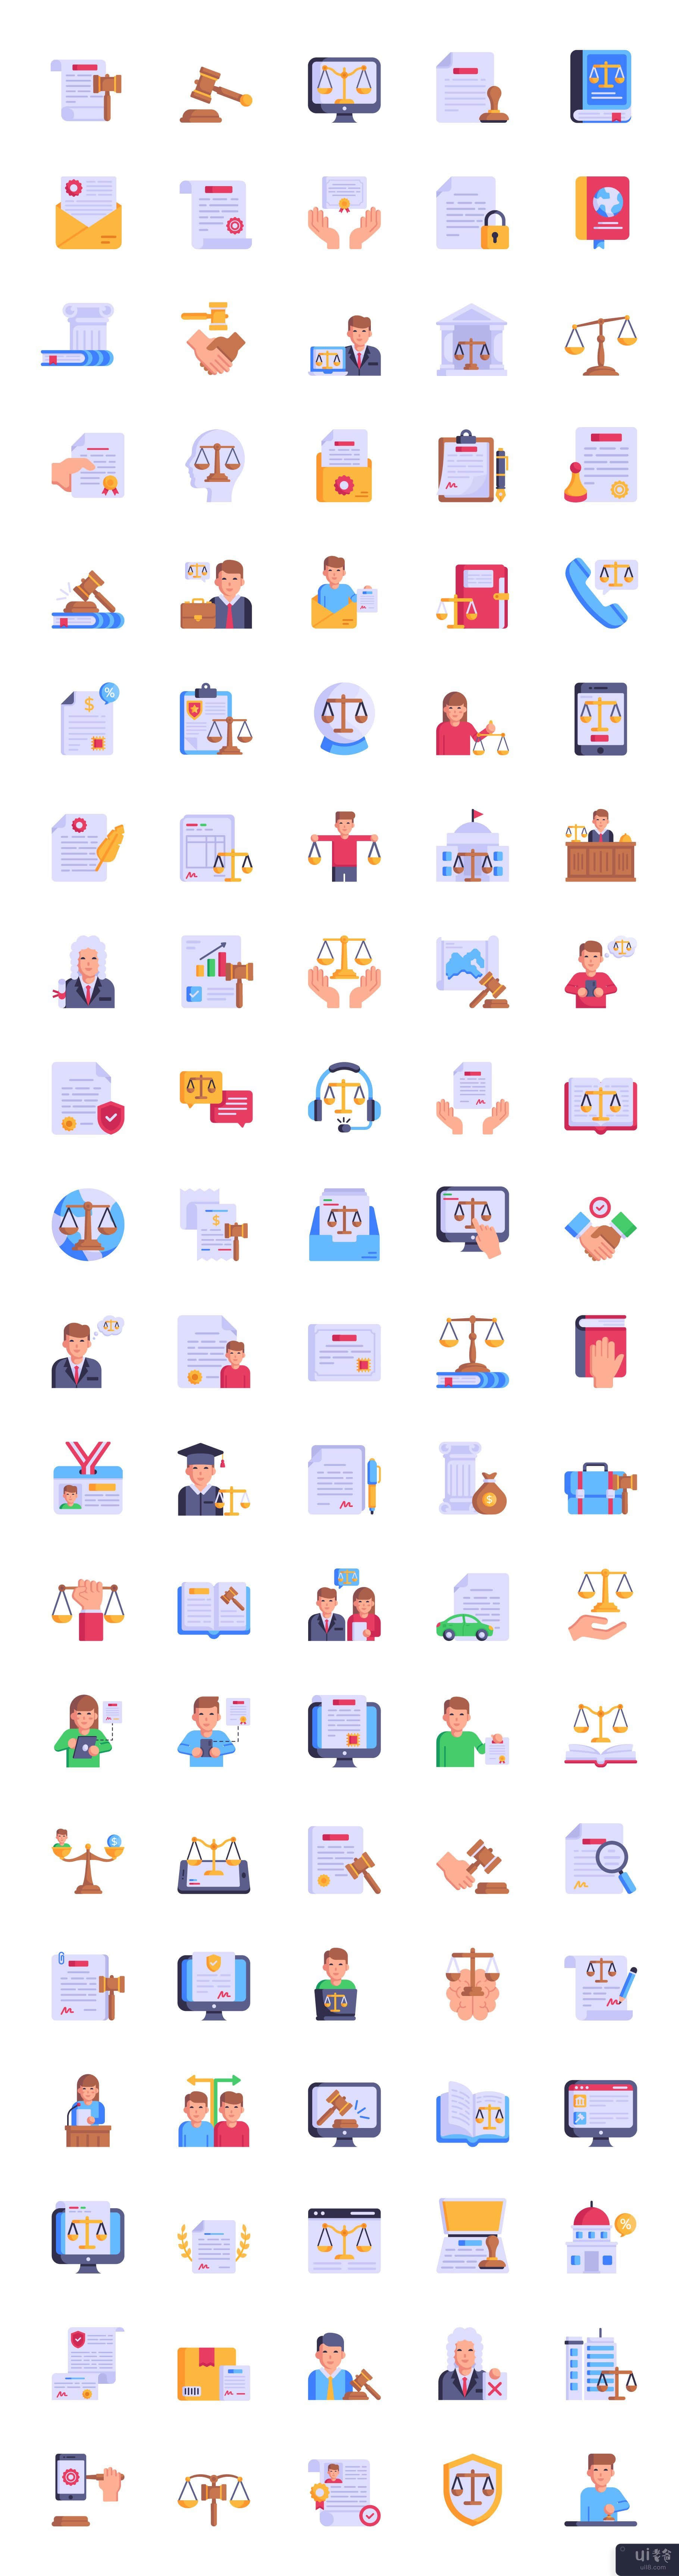 100 法律服务矢量图标(100 Legal Services Vector Icons)插图7